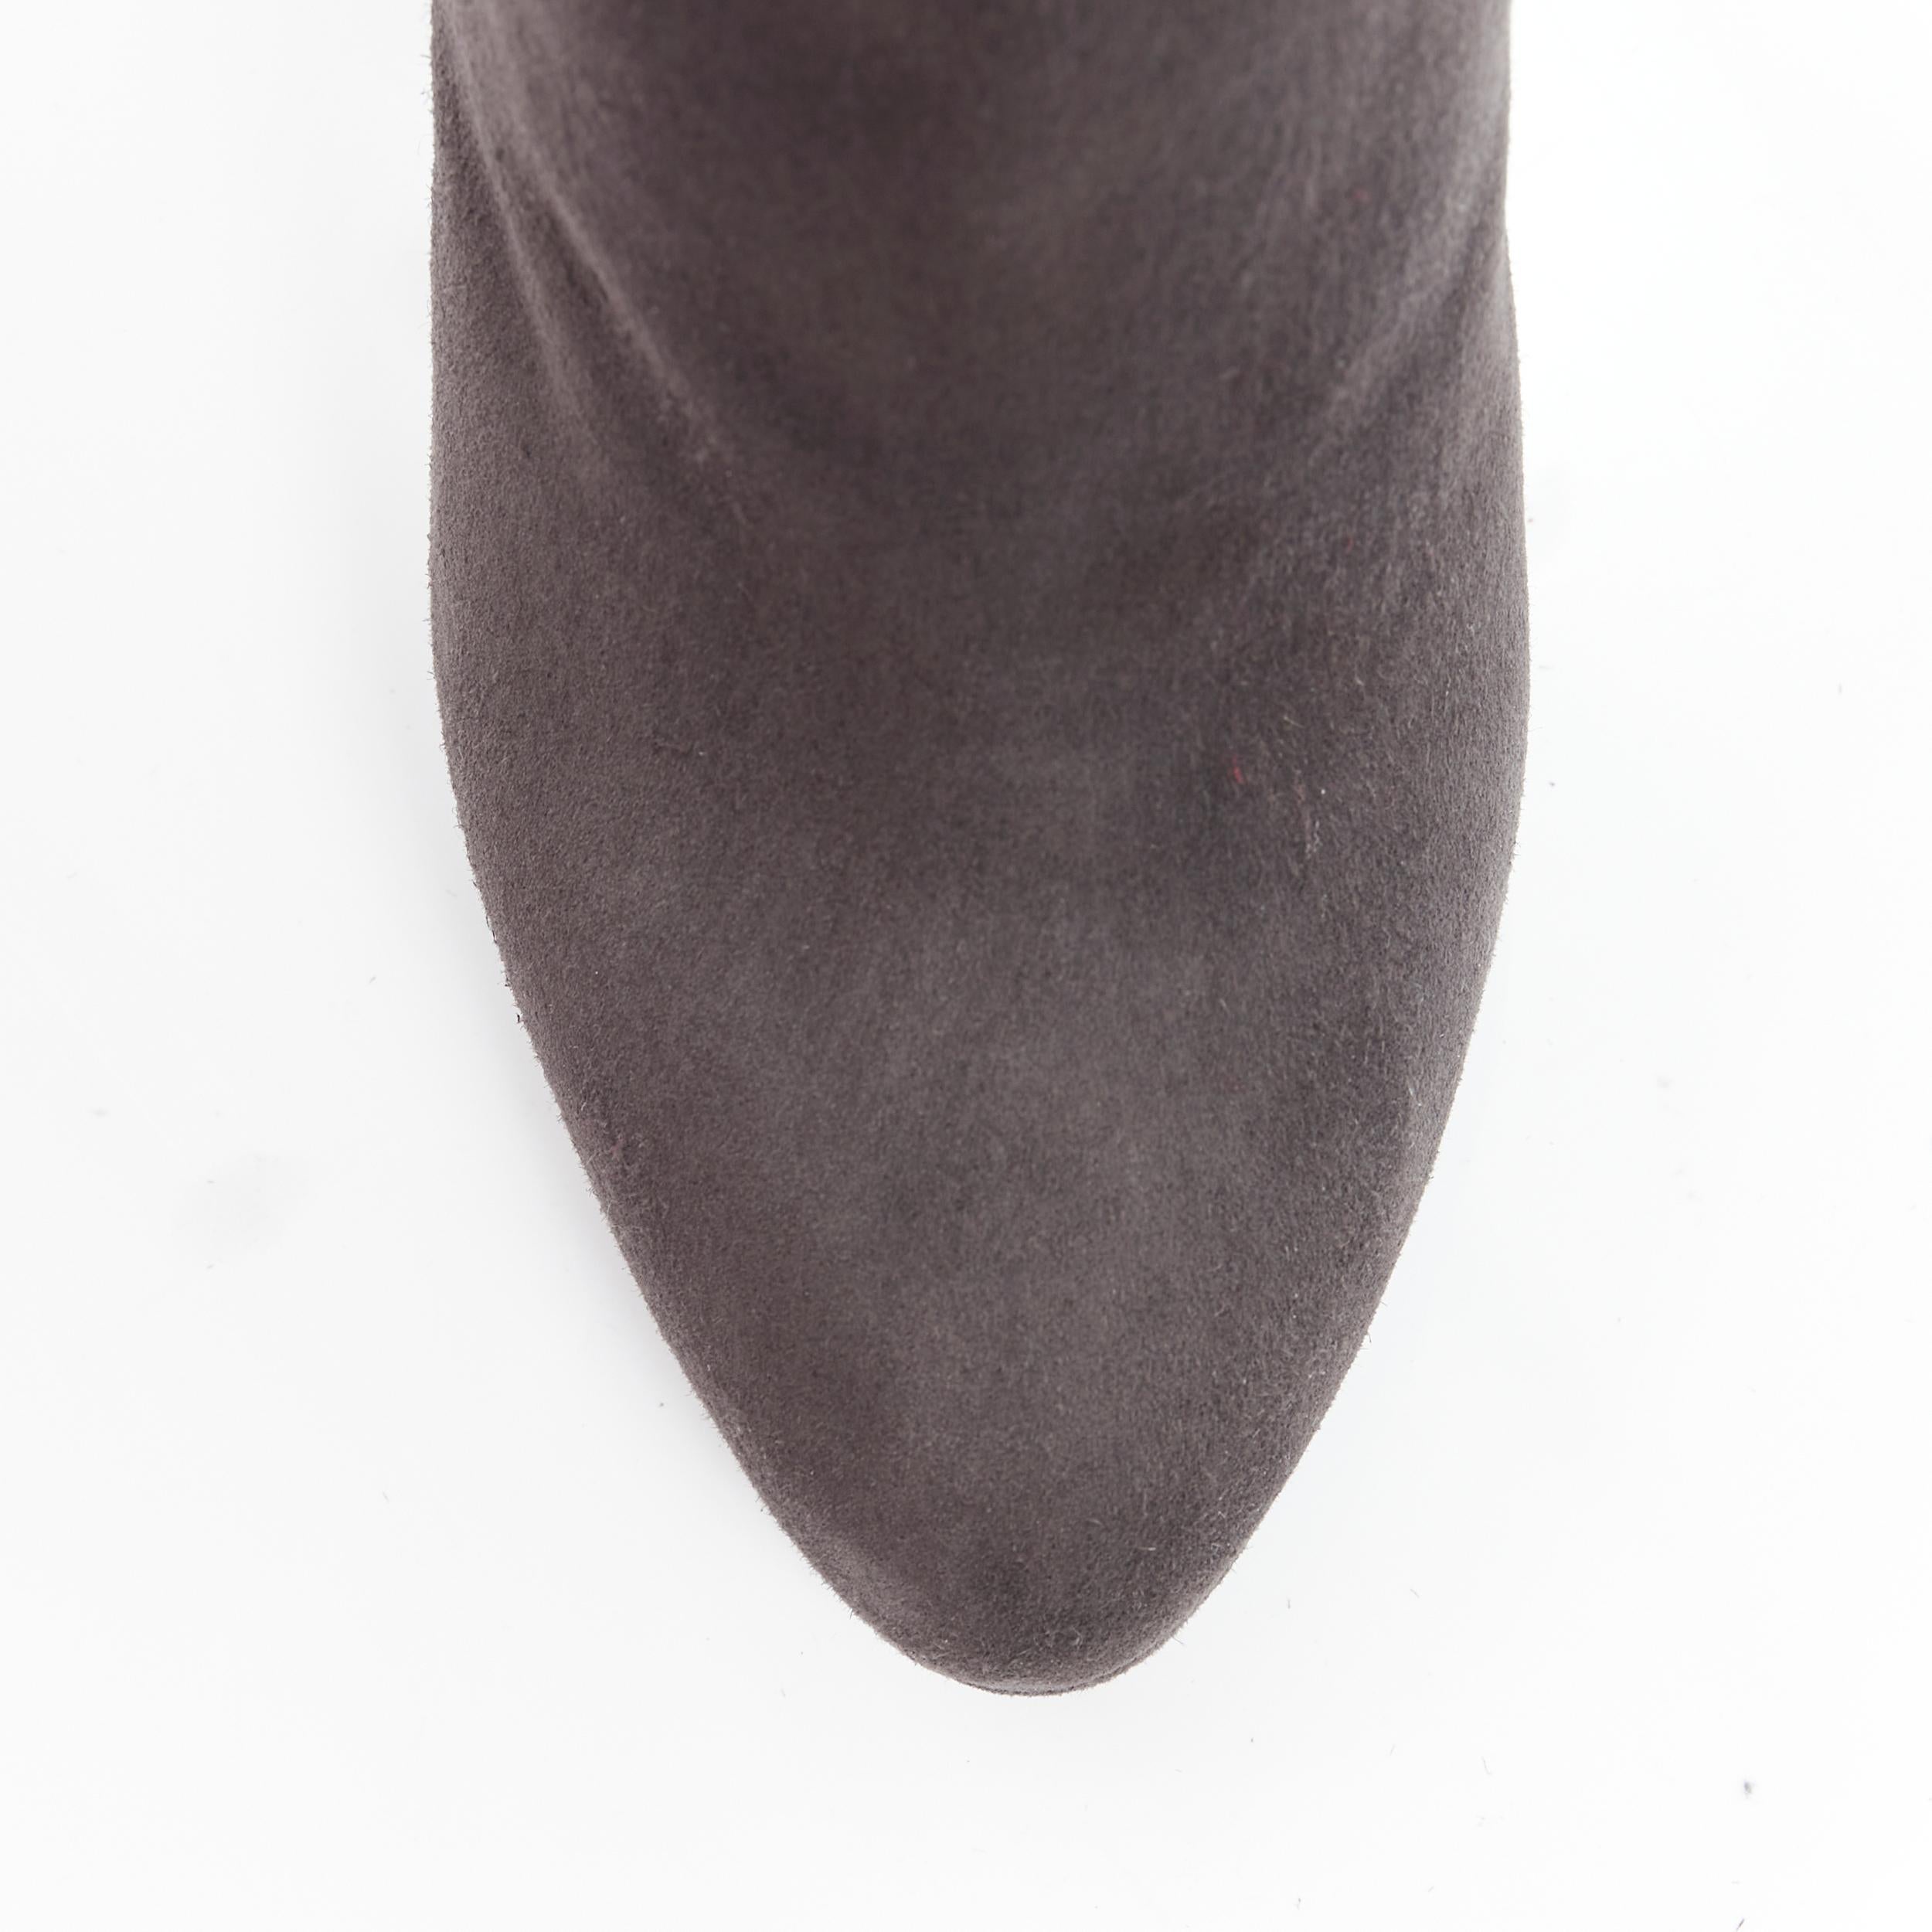 YVES SAINT LAURENT dark grey suede almond toe platform ankle bootie EU37.5 For Sale 4